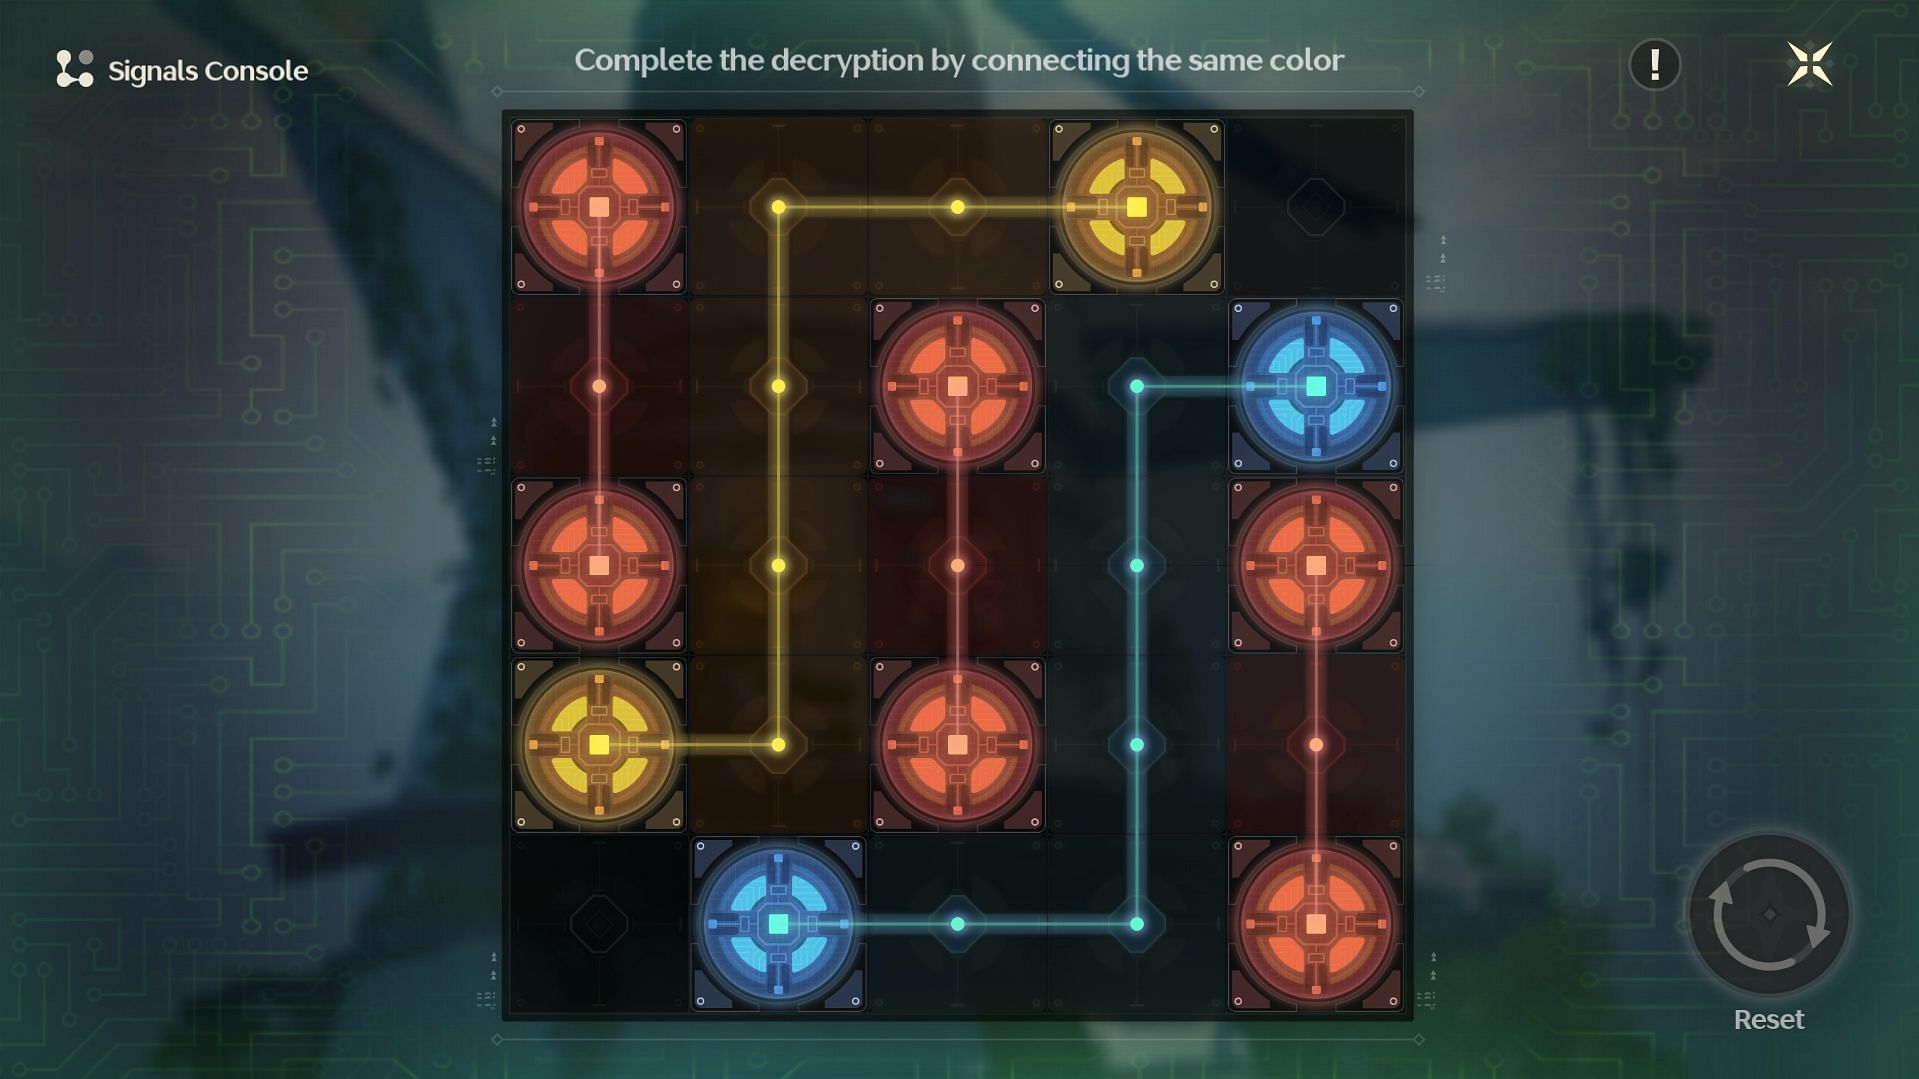 Signals Console puzzle solution (Image via Kuro Games)